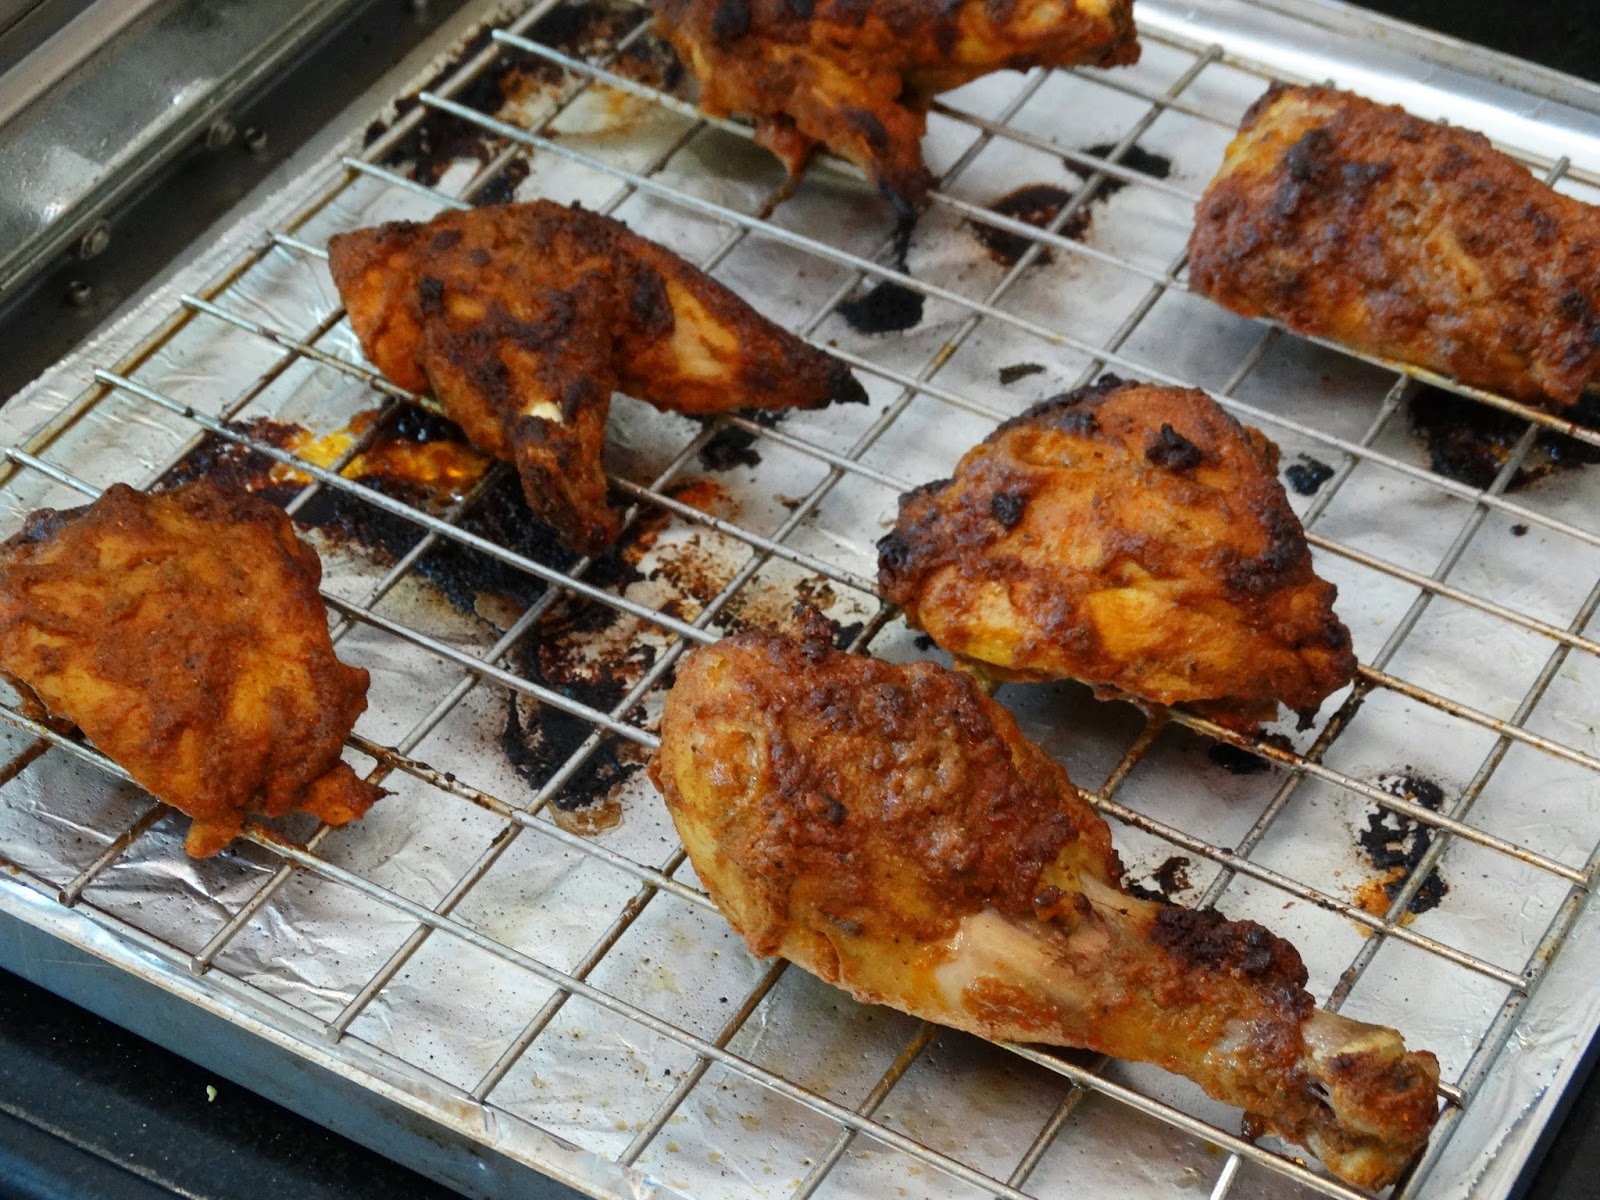 4 Electric Tandoor Options To Make Tandoori Chicken, Fish And More - NDTV  Food